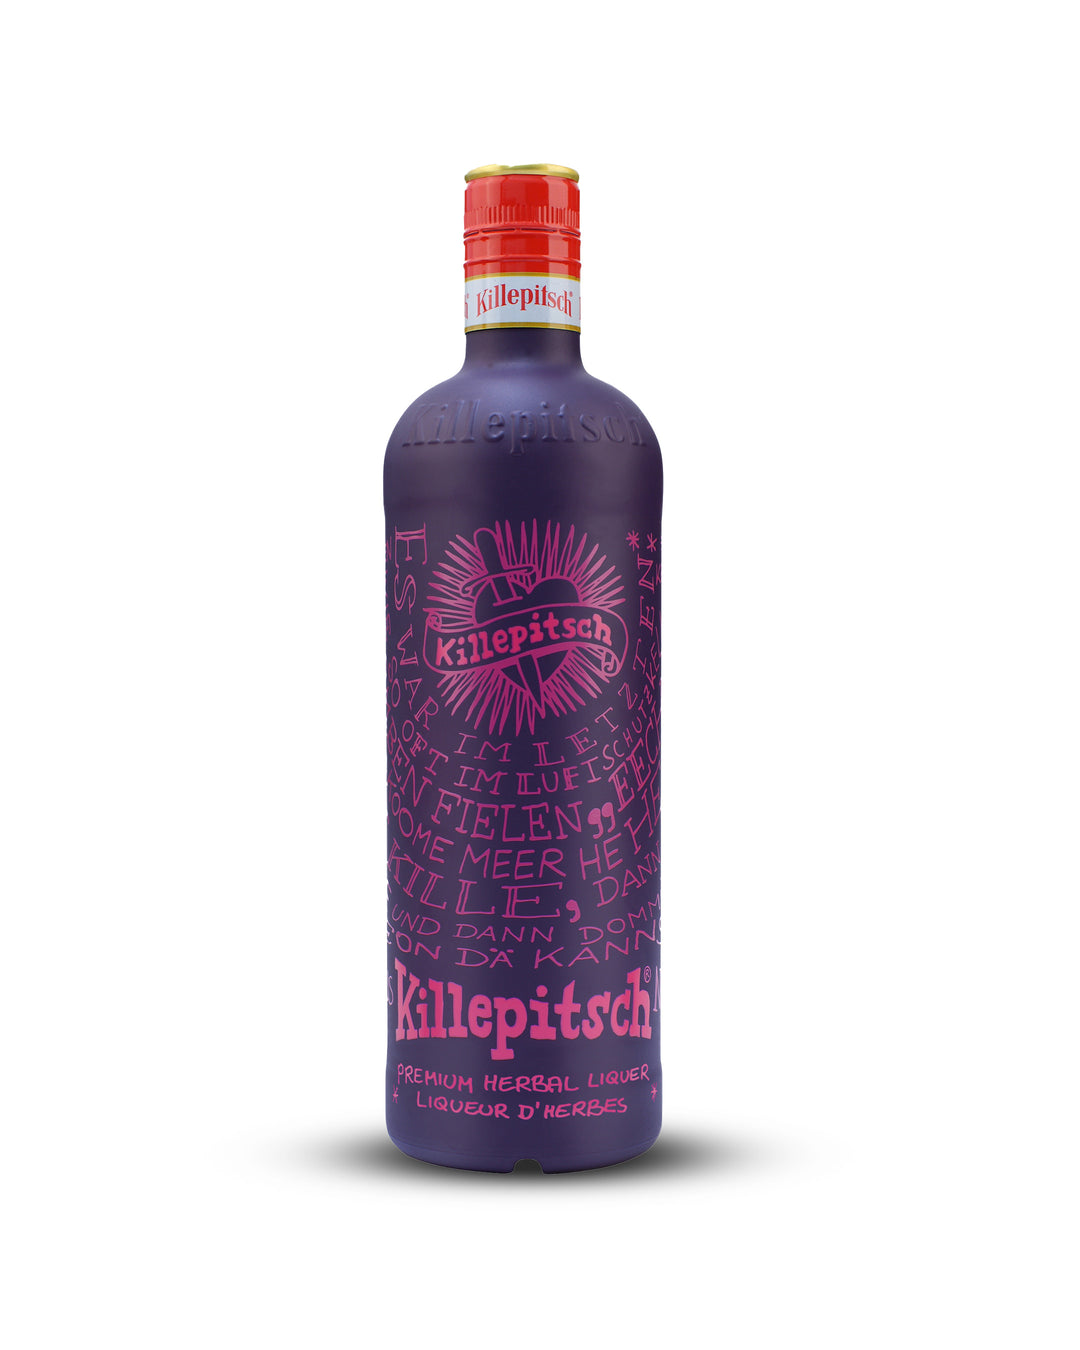 Killepitsch 42% - Premium Herbal Liquer / Liqueur d'Herbes 0,75L Canada Edition